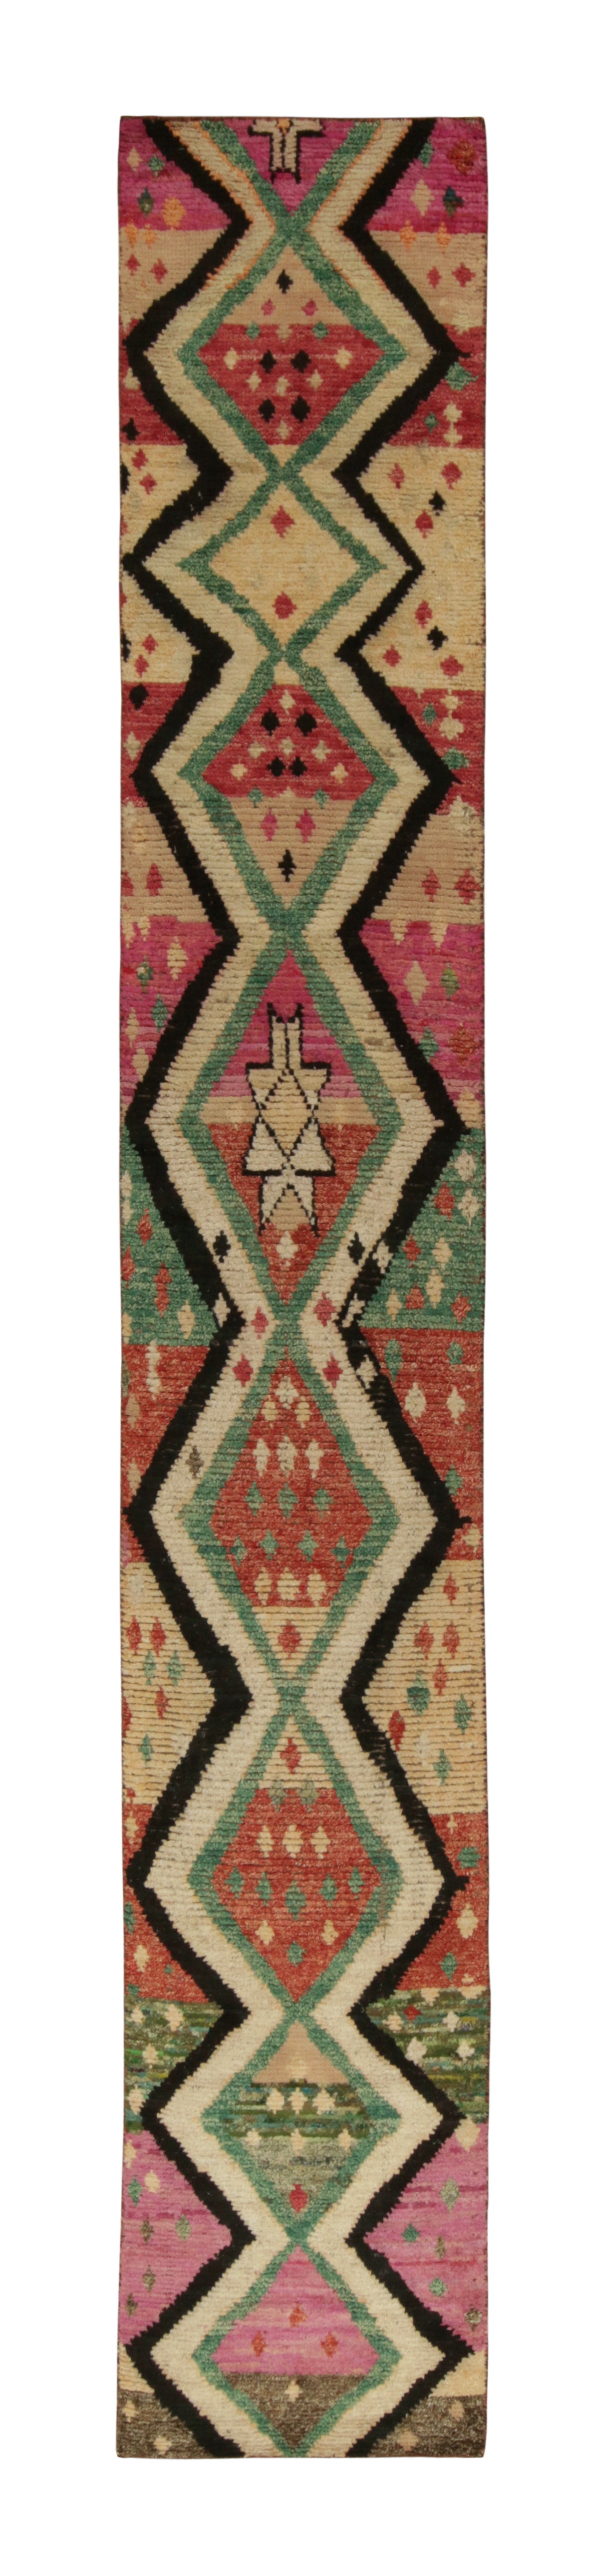 Rug & Kilim’s Moroccan Style Runner in Multicolor Tribal Geometric Pattern